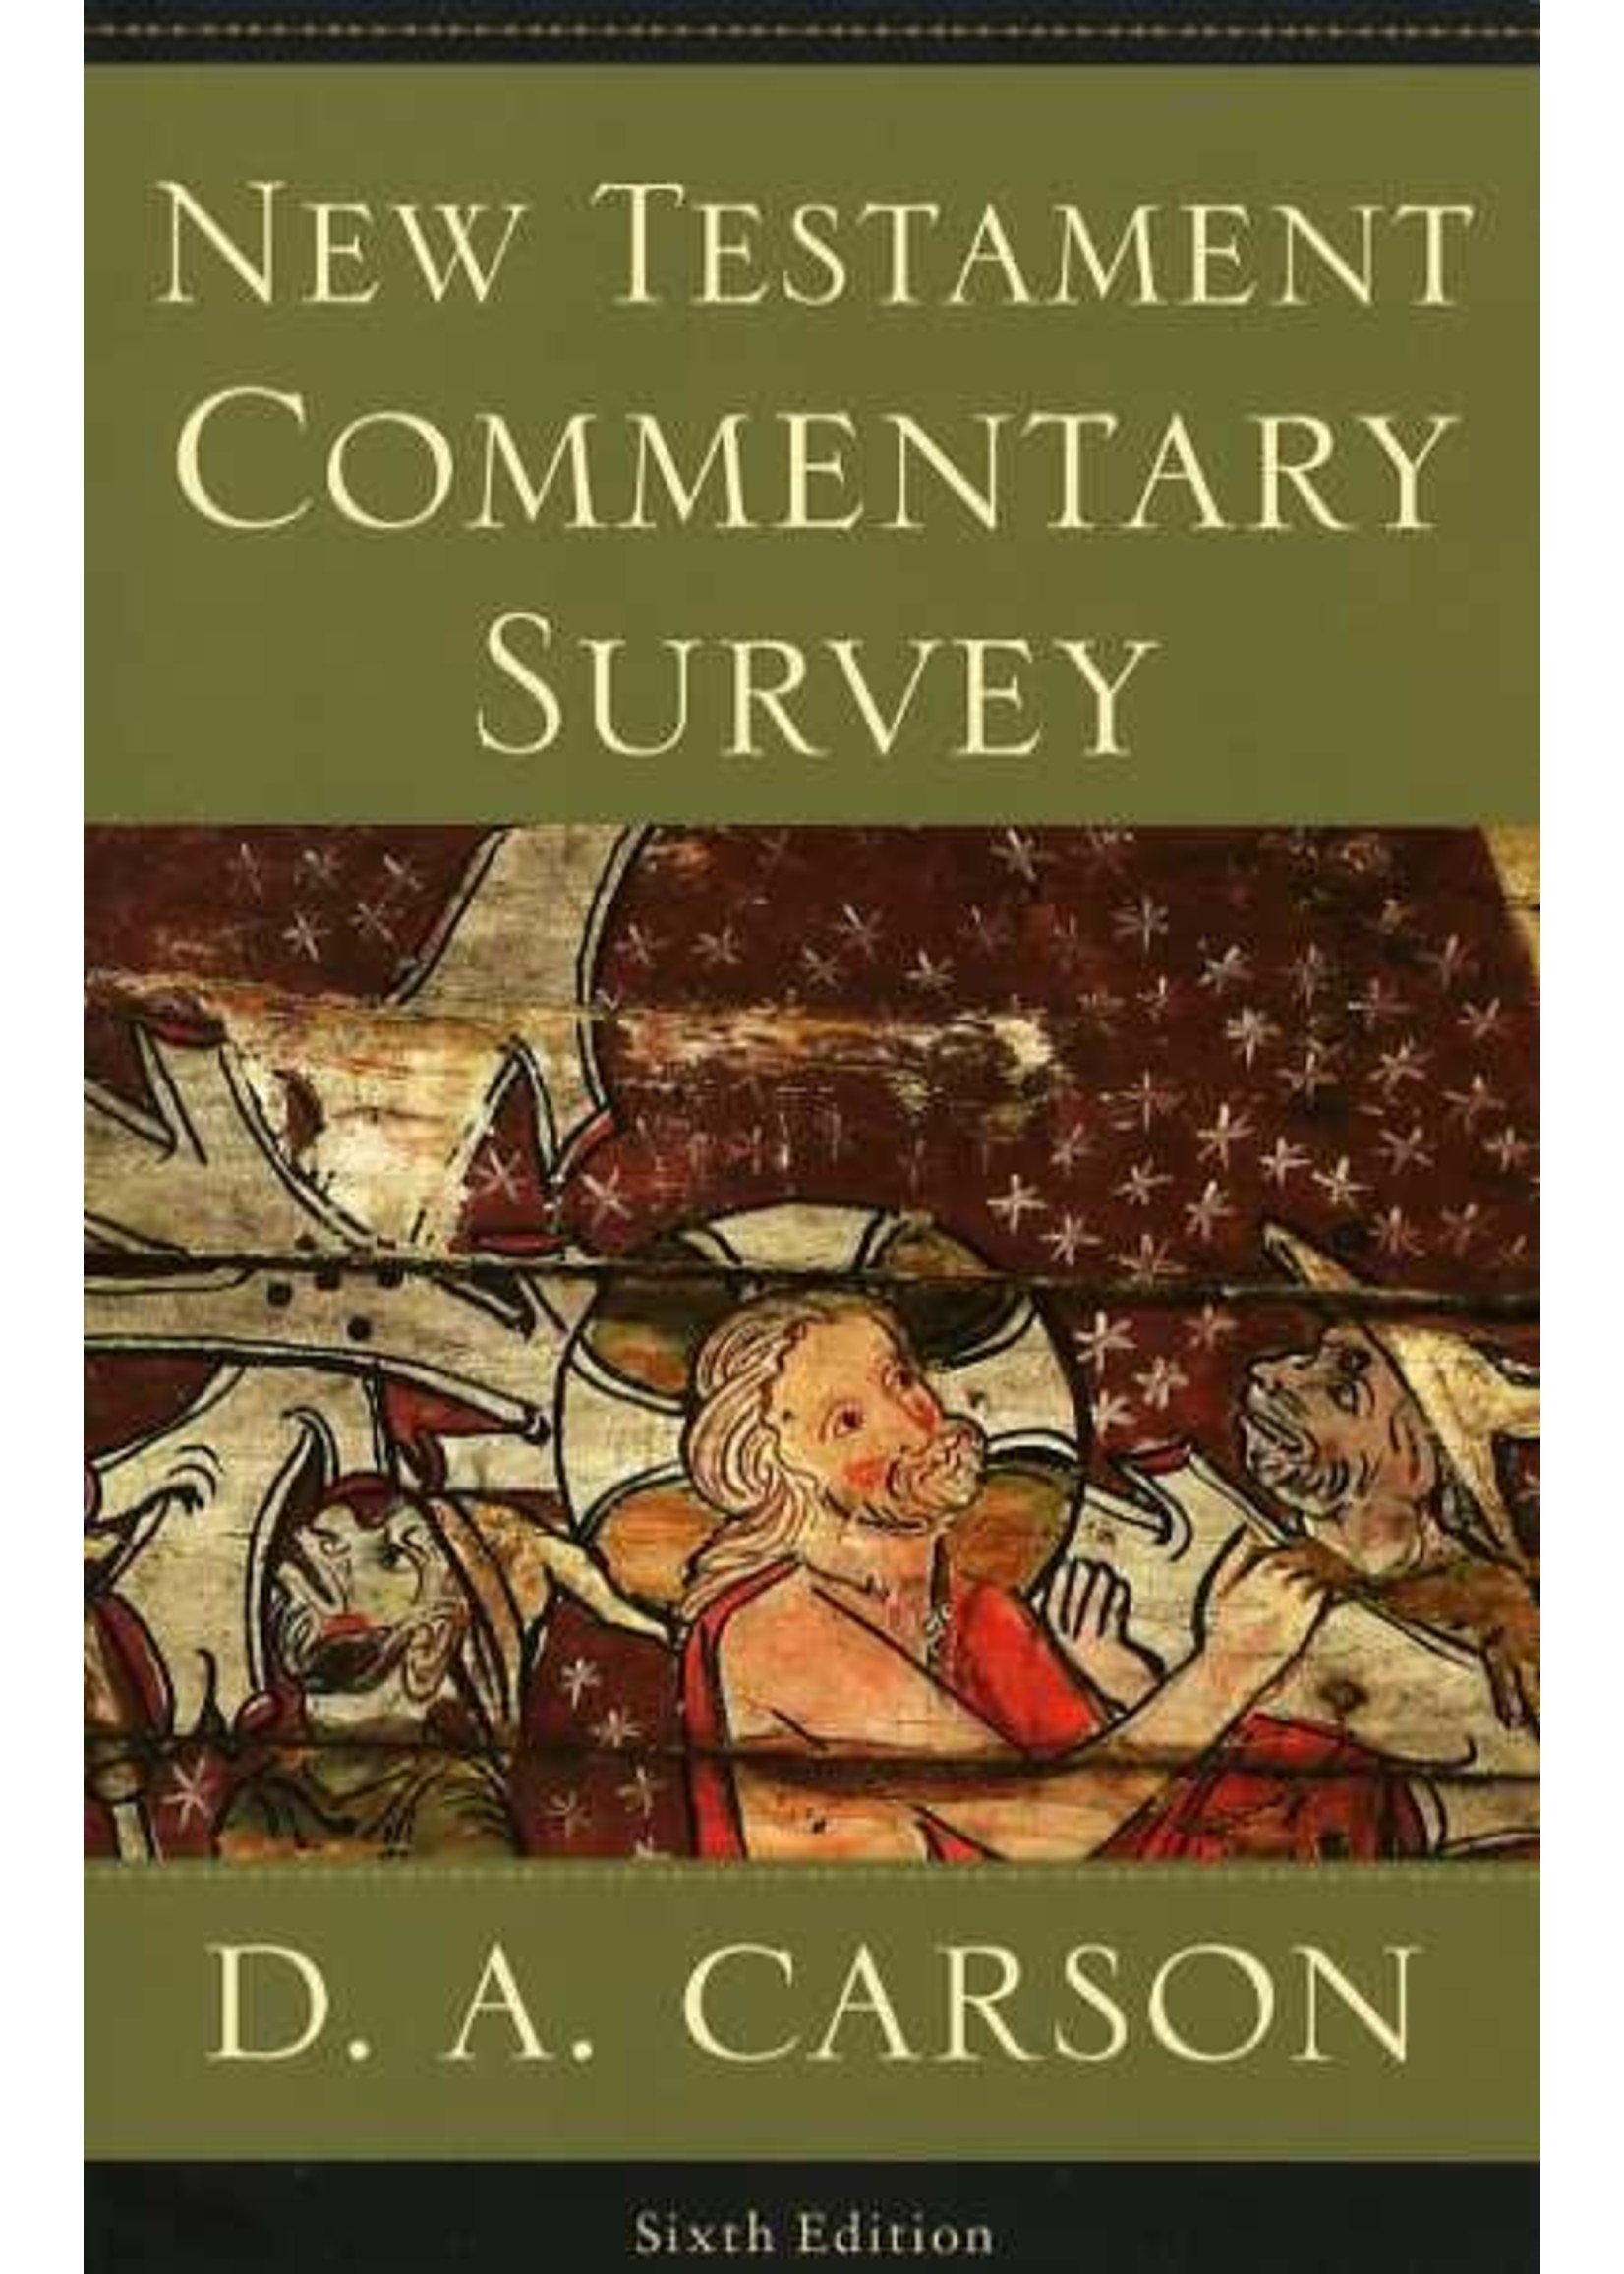 Baker Publishing New Testament Commentary Survey - D. A. Carson